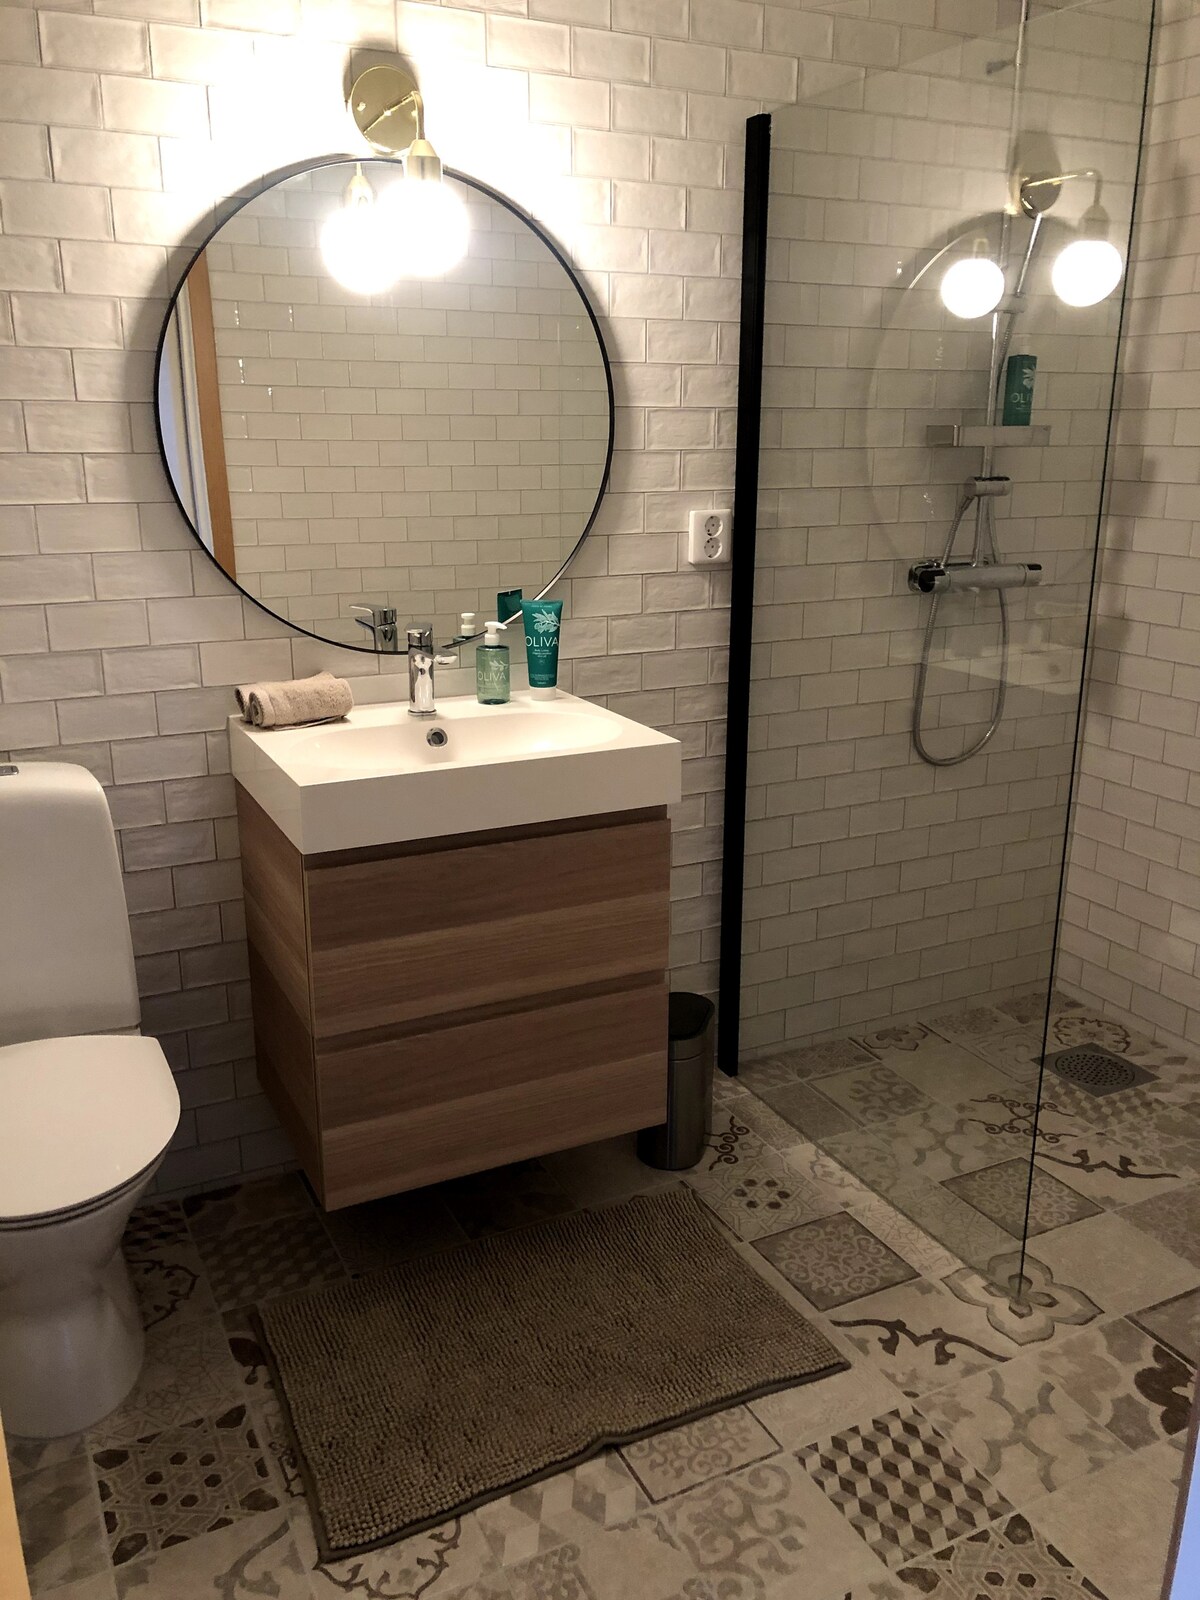 Nära Båstad/Torekov : 2 dubbelrum dusch, toalett